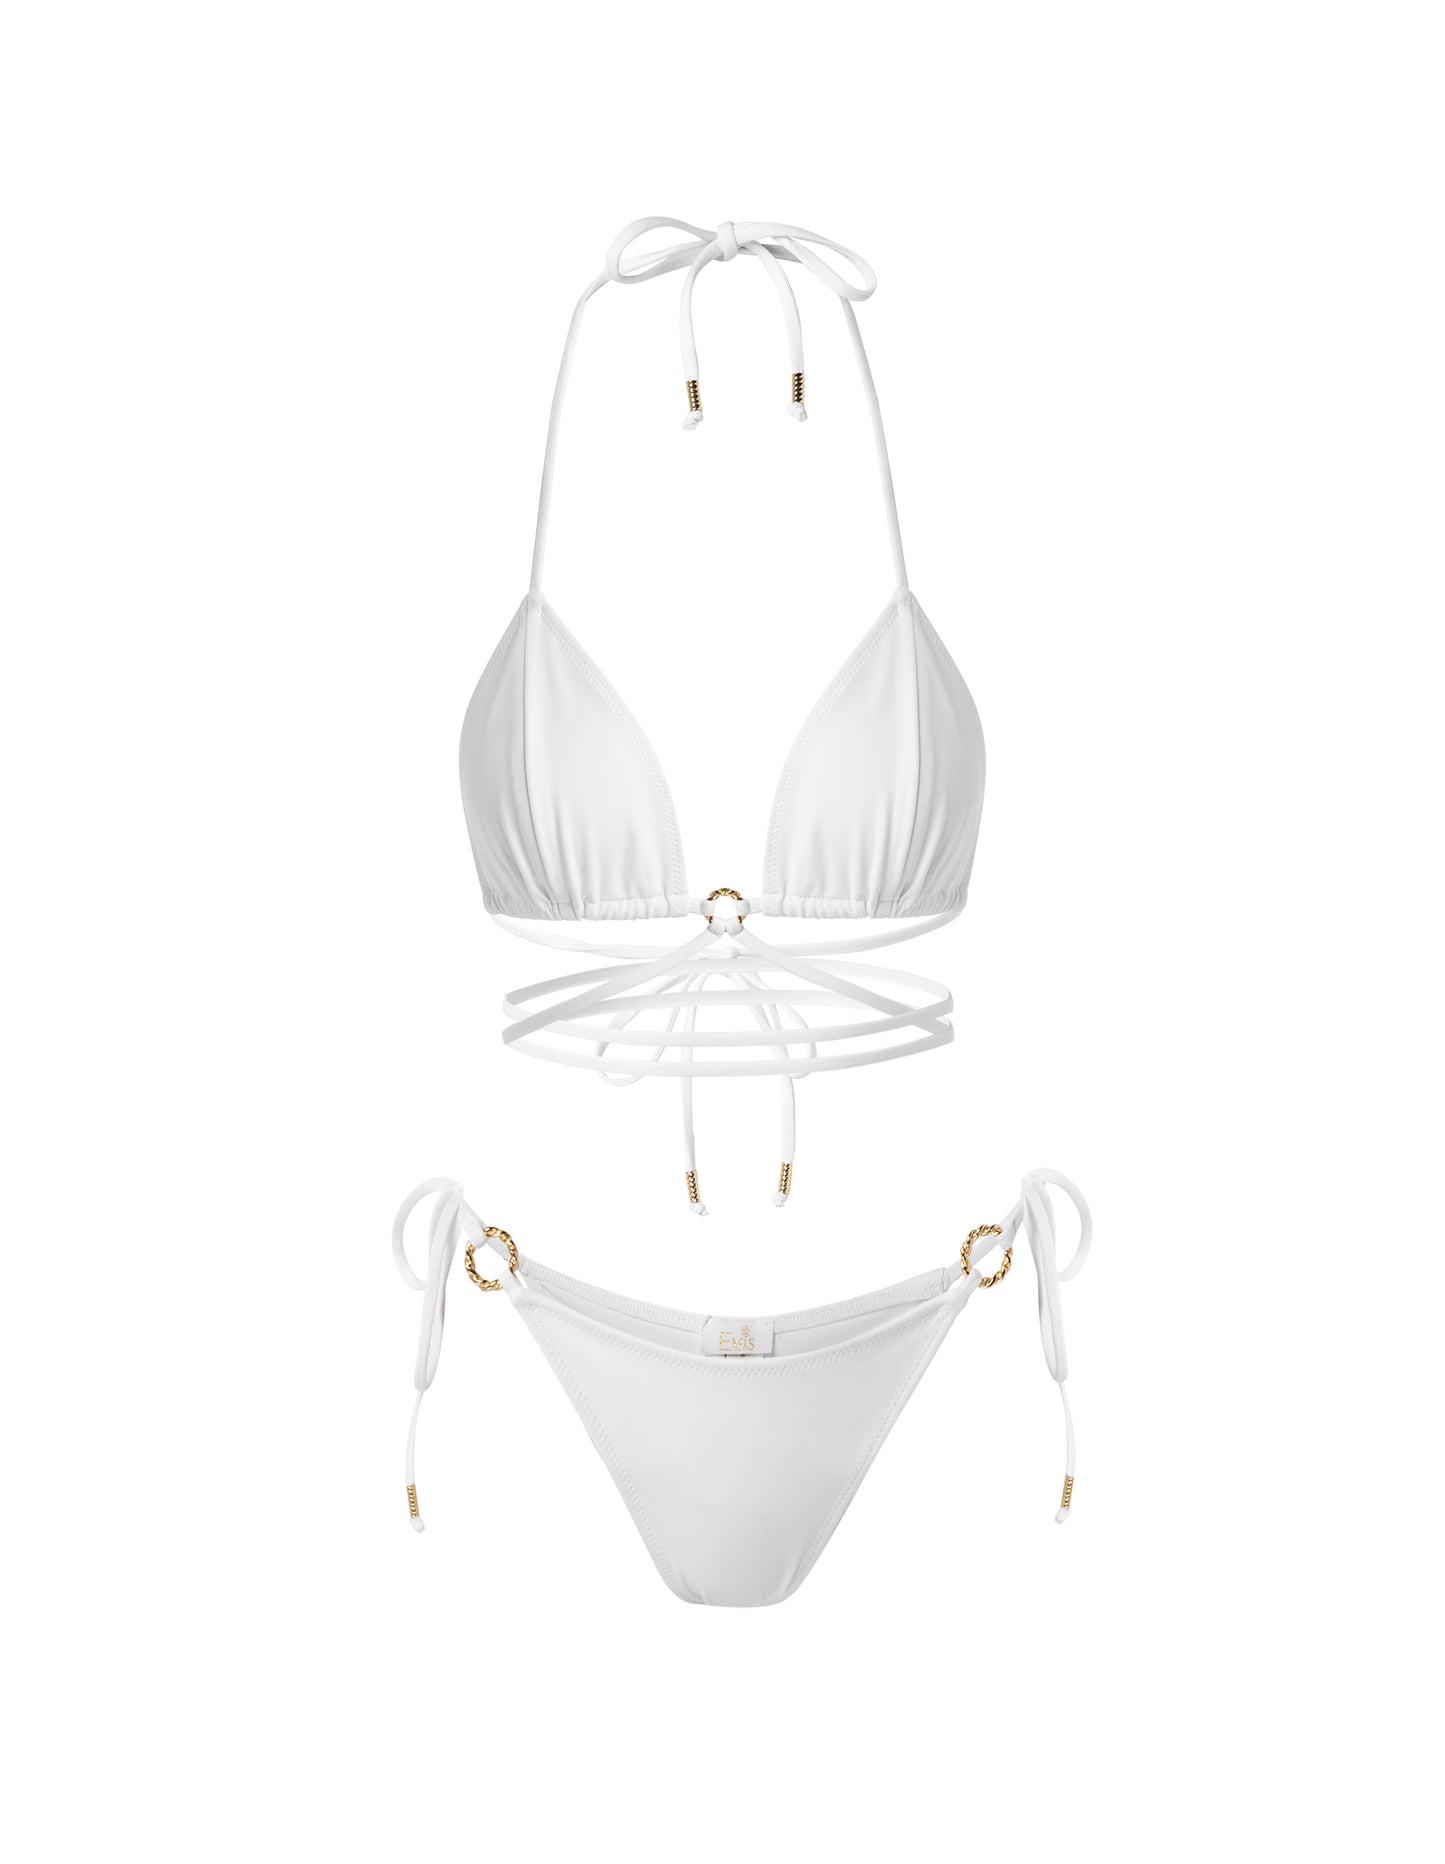 Swimsuit Angello White Bottom